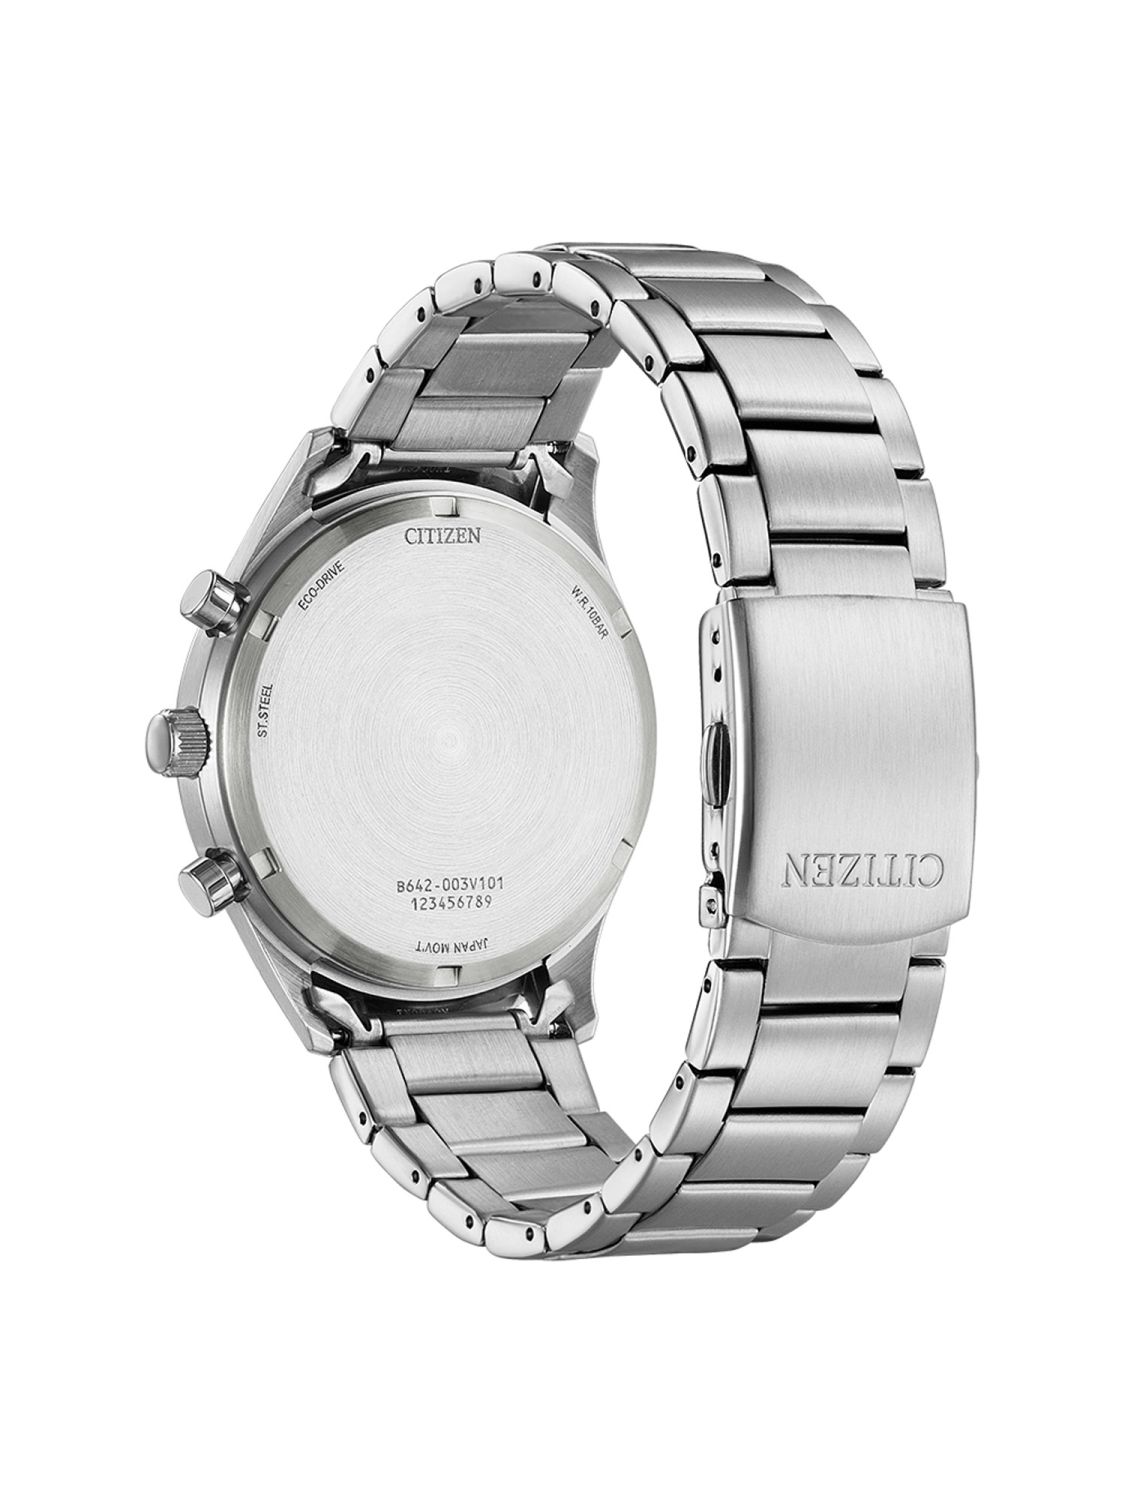 Citizen Eco-Drive Men's Watch Chronograph Steel/Black CA7028-81E • uhrcenter